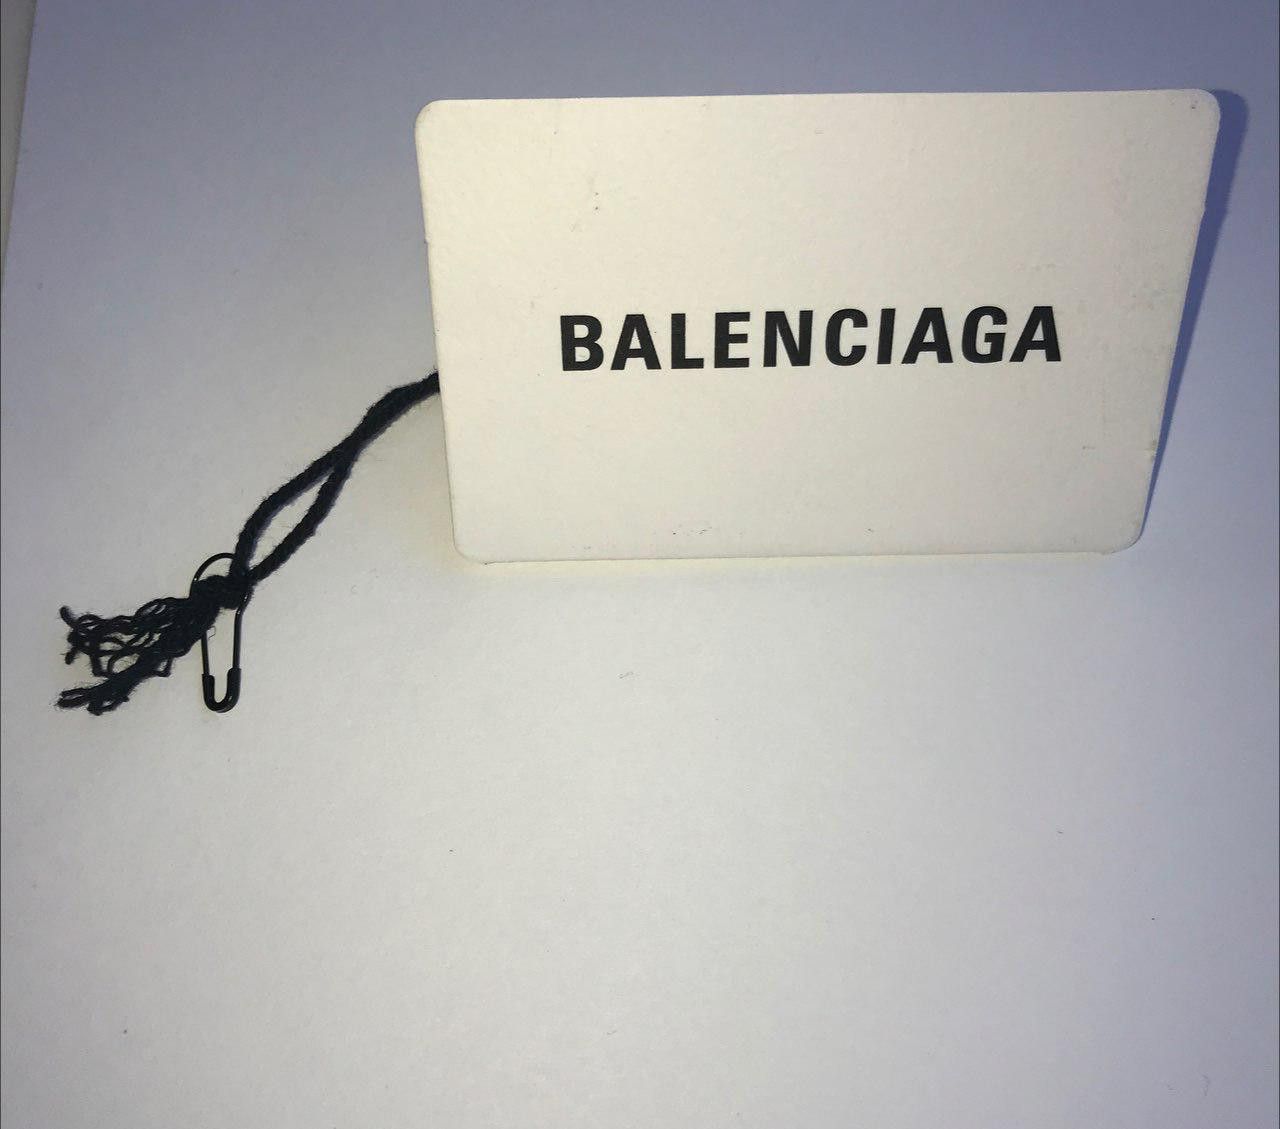 Balenciaga Balenciaga track jacket Size US M / EU 48-50 / 2 - 6 Thumbnail